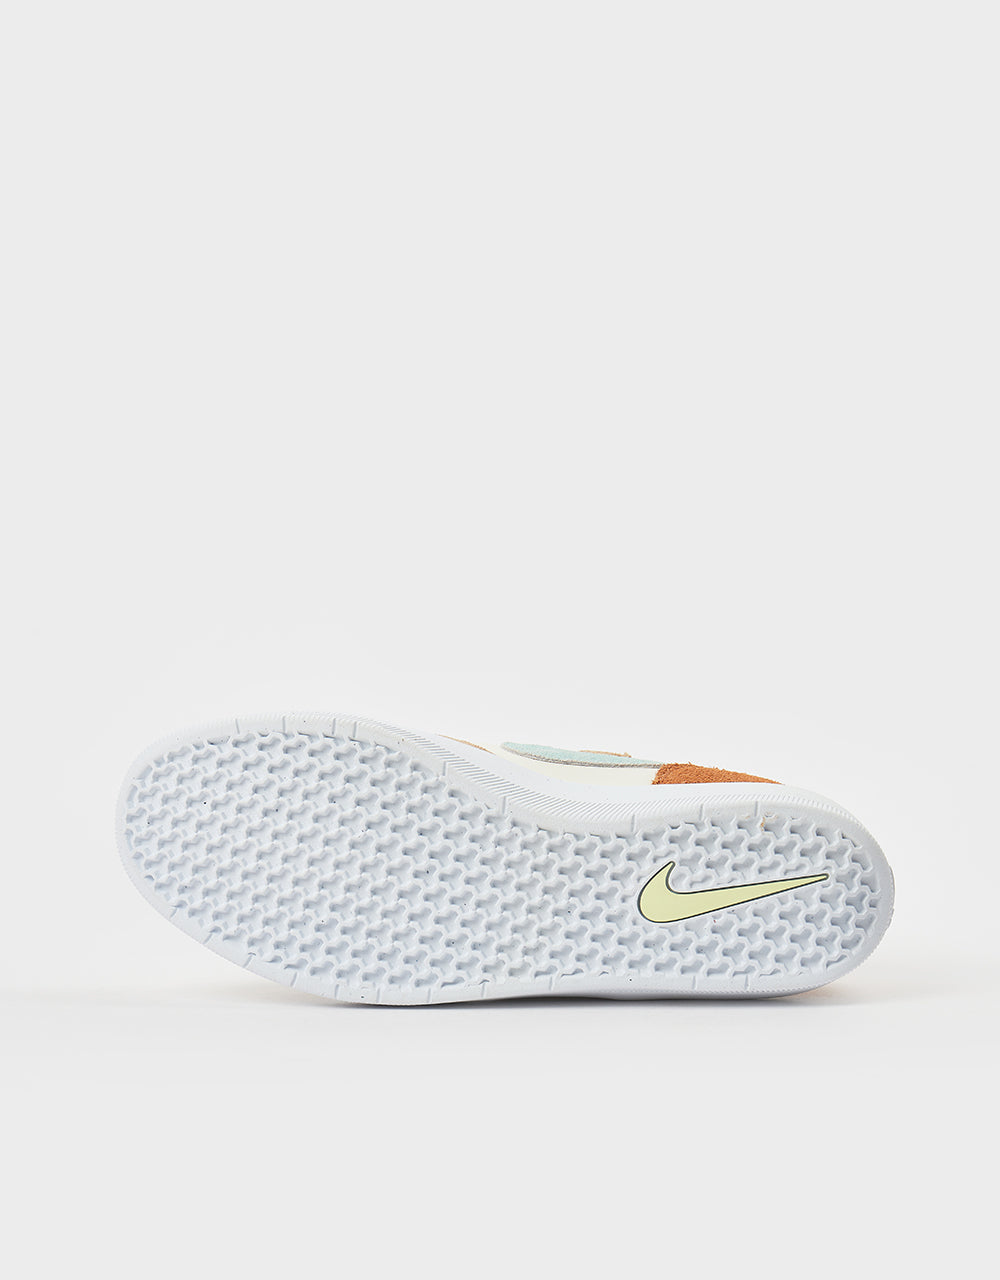 Nike SB Force 58 CN Skate Shoes - Pale Ivory/Jade Ice-White-Hemp-Amber Brown-Citron Tint